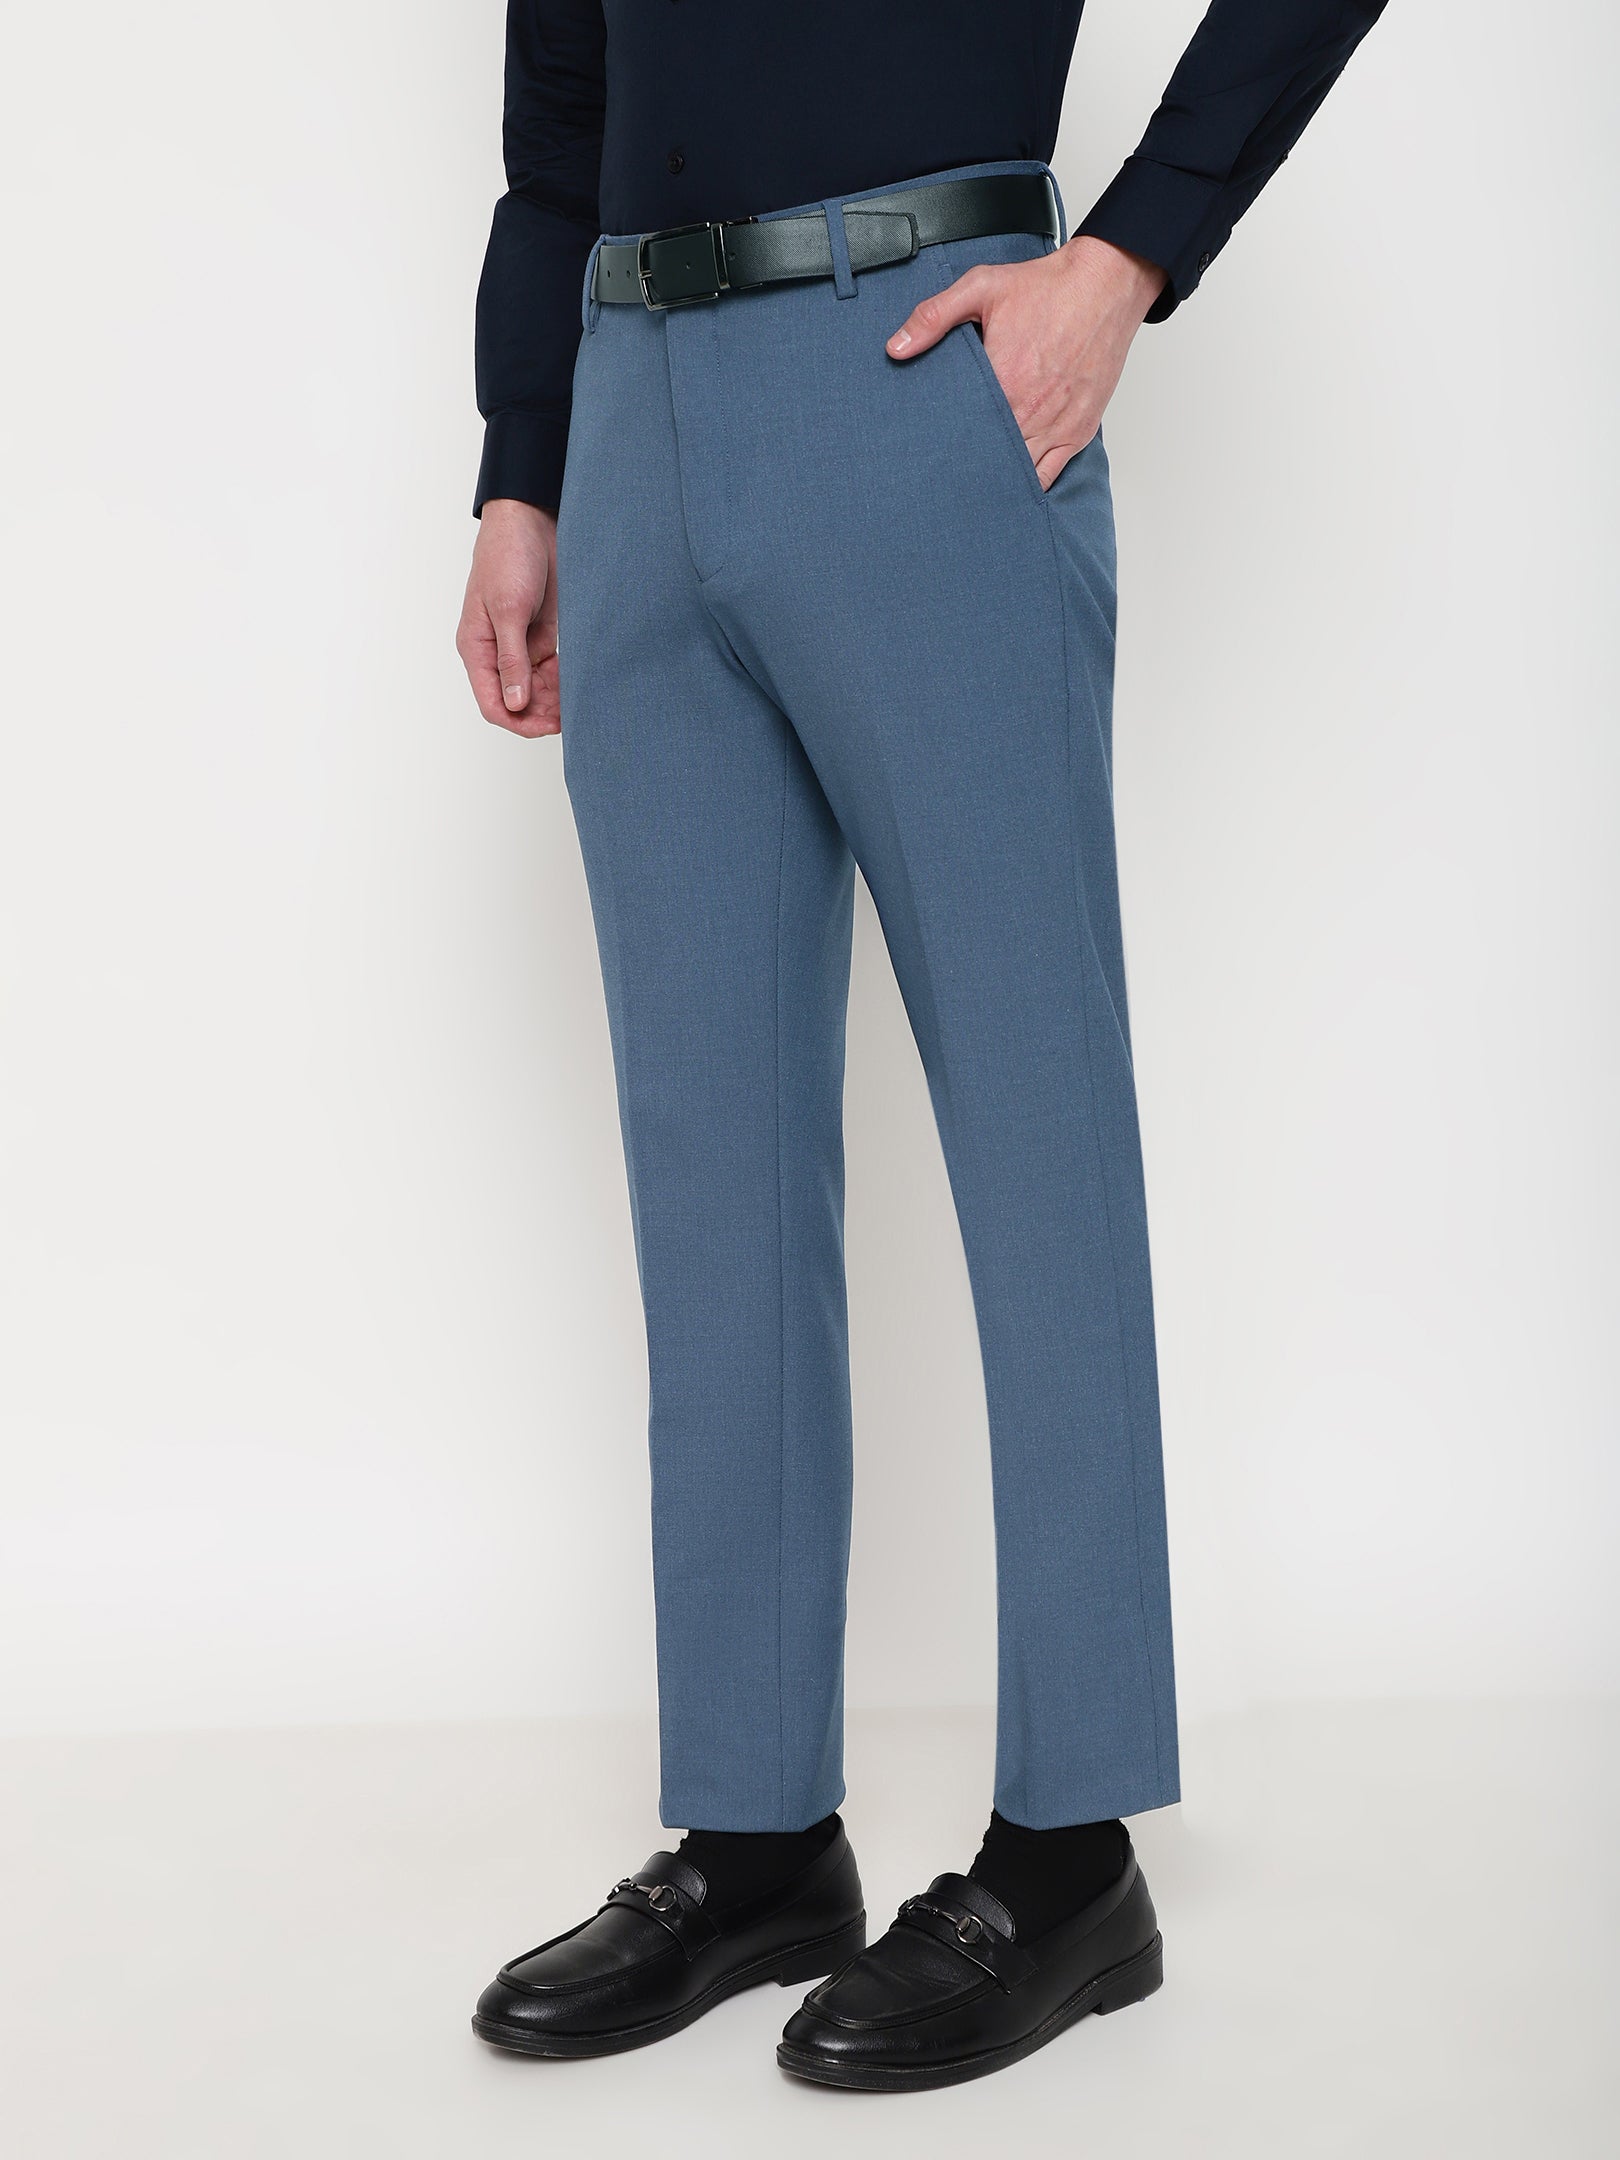 Aysoti Hamleaford Blue Slim Fit Double Buckle Pants - Aysotiman